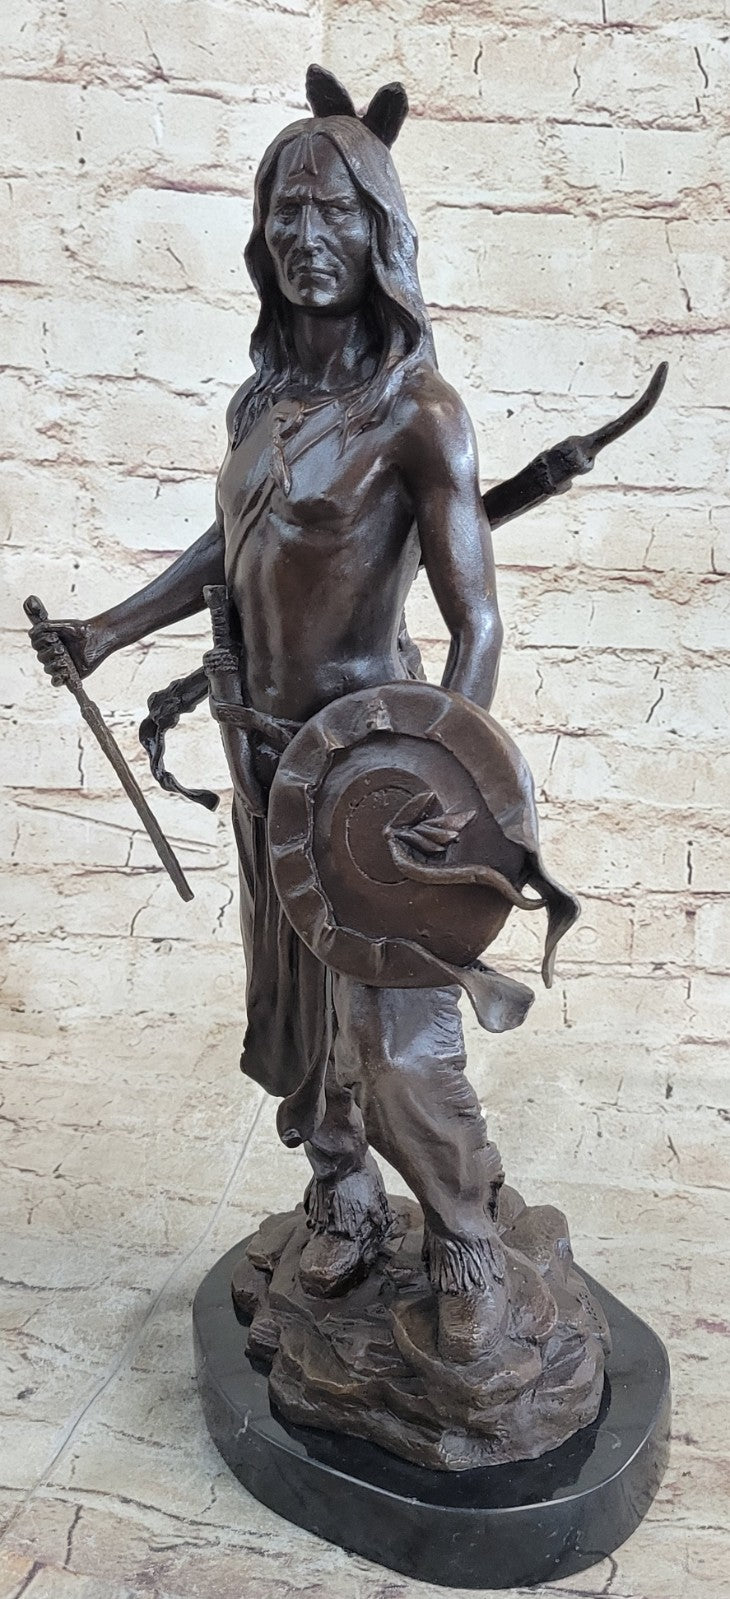 Signed Native American Indian Warrior Bronze Sculpture Statue Figurine Art Deco